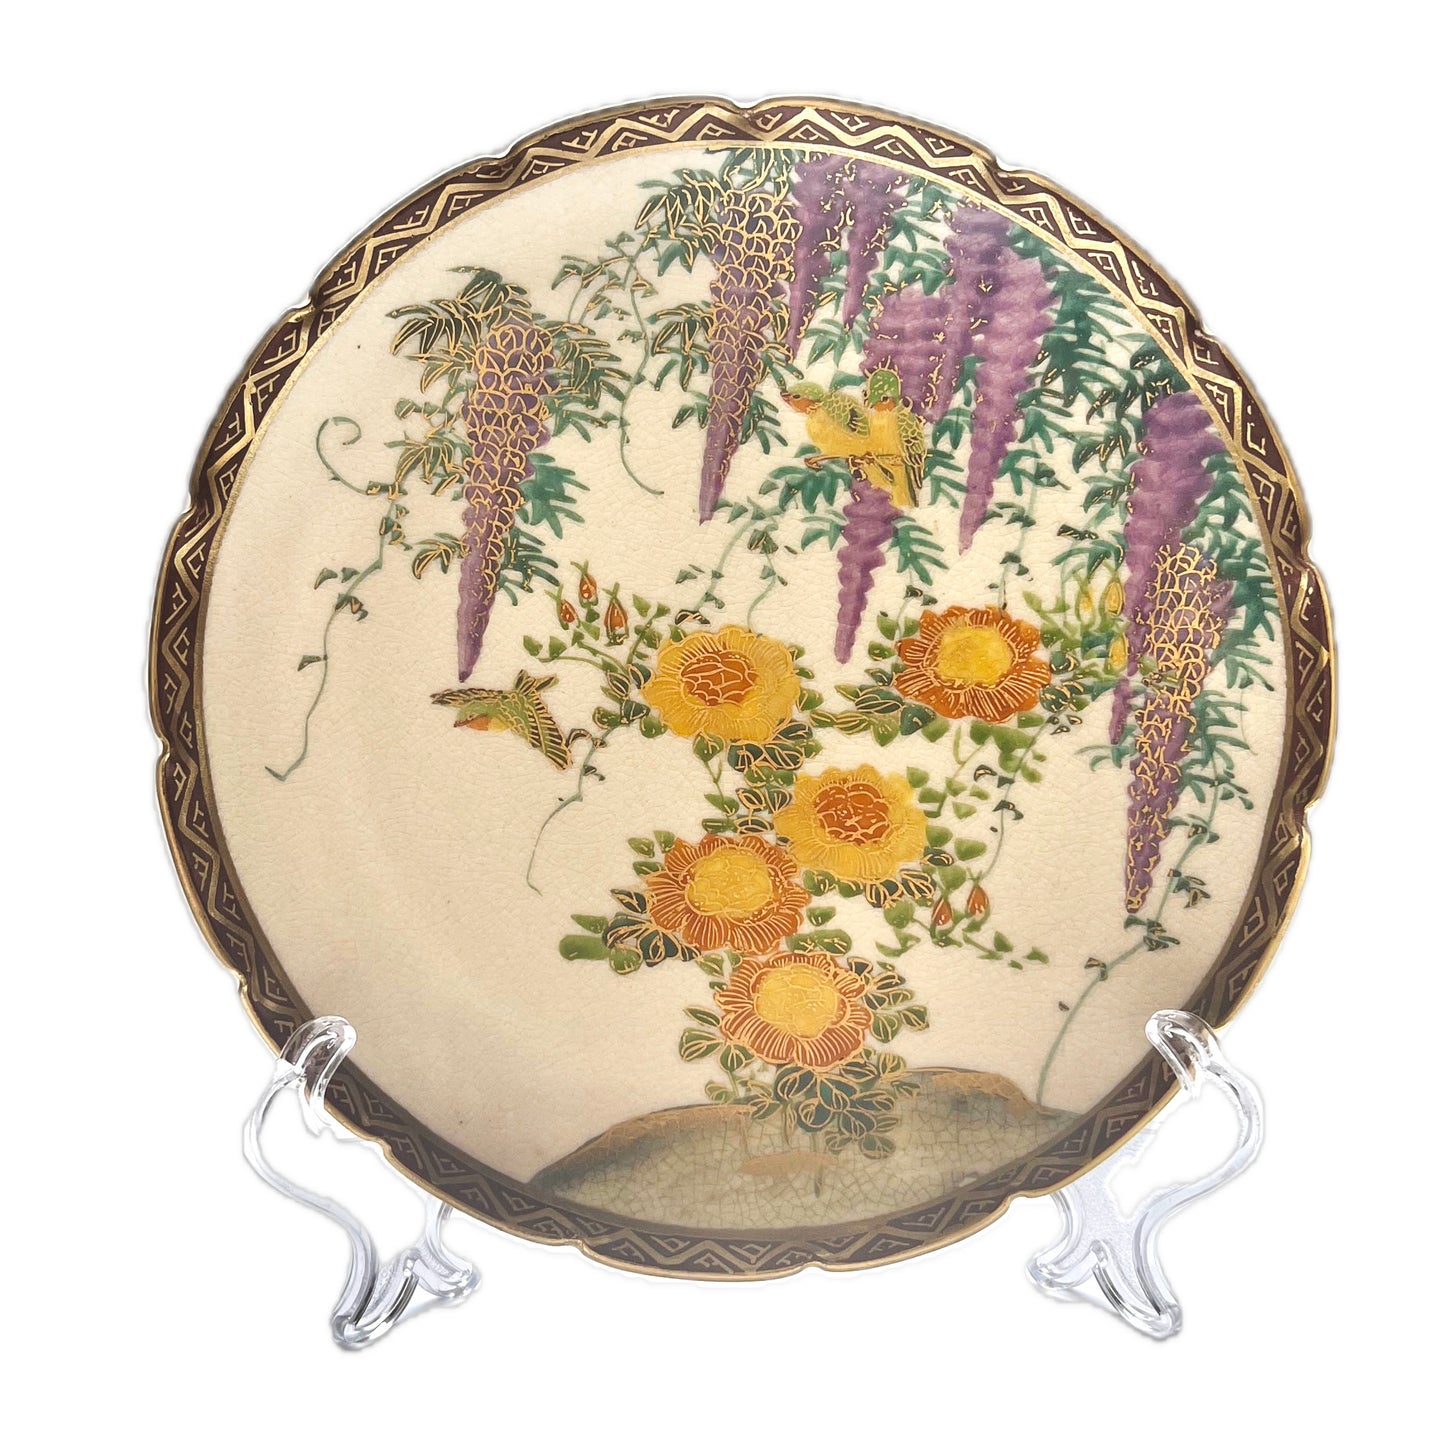 Early 20th century Satsuma Wisteria Flower plate by noted maker Koshida 越田, Taisho Period